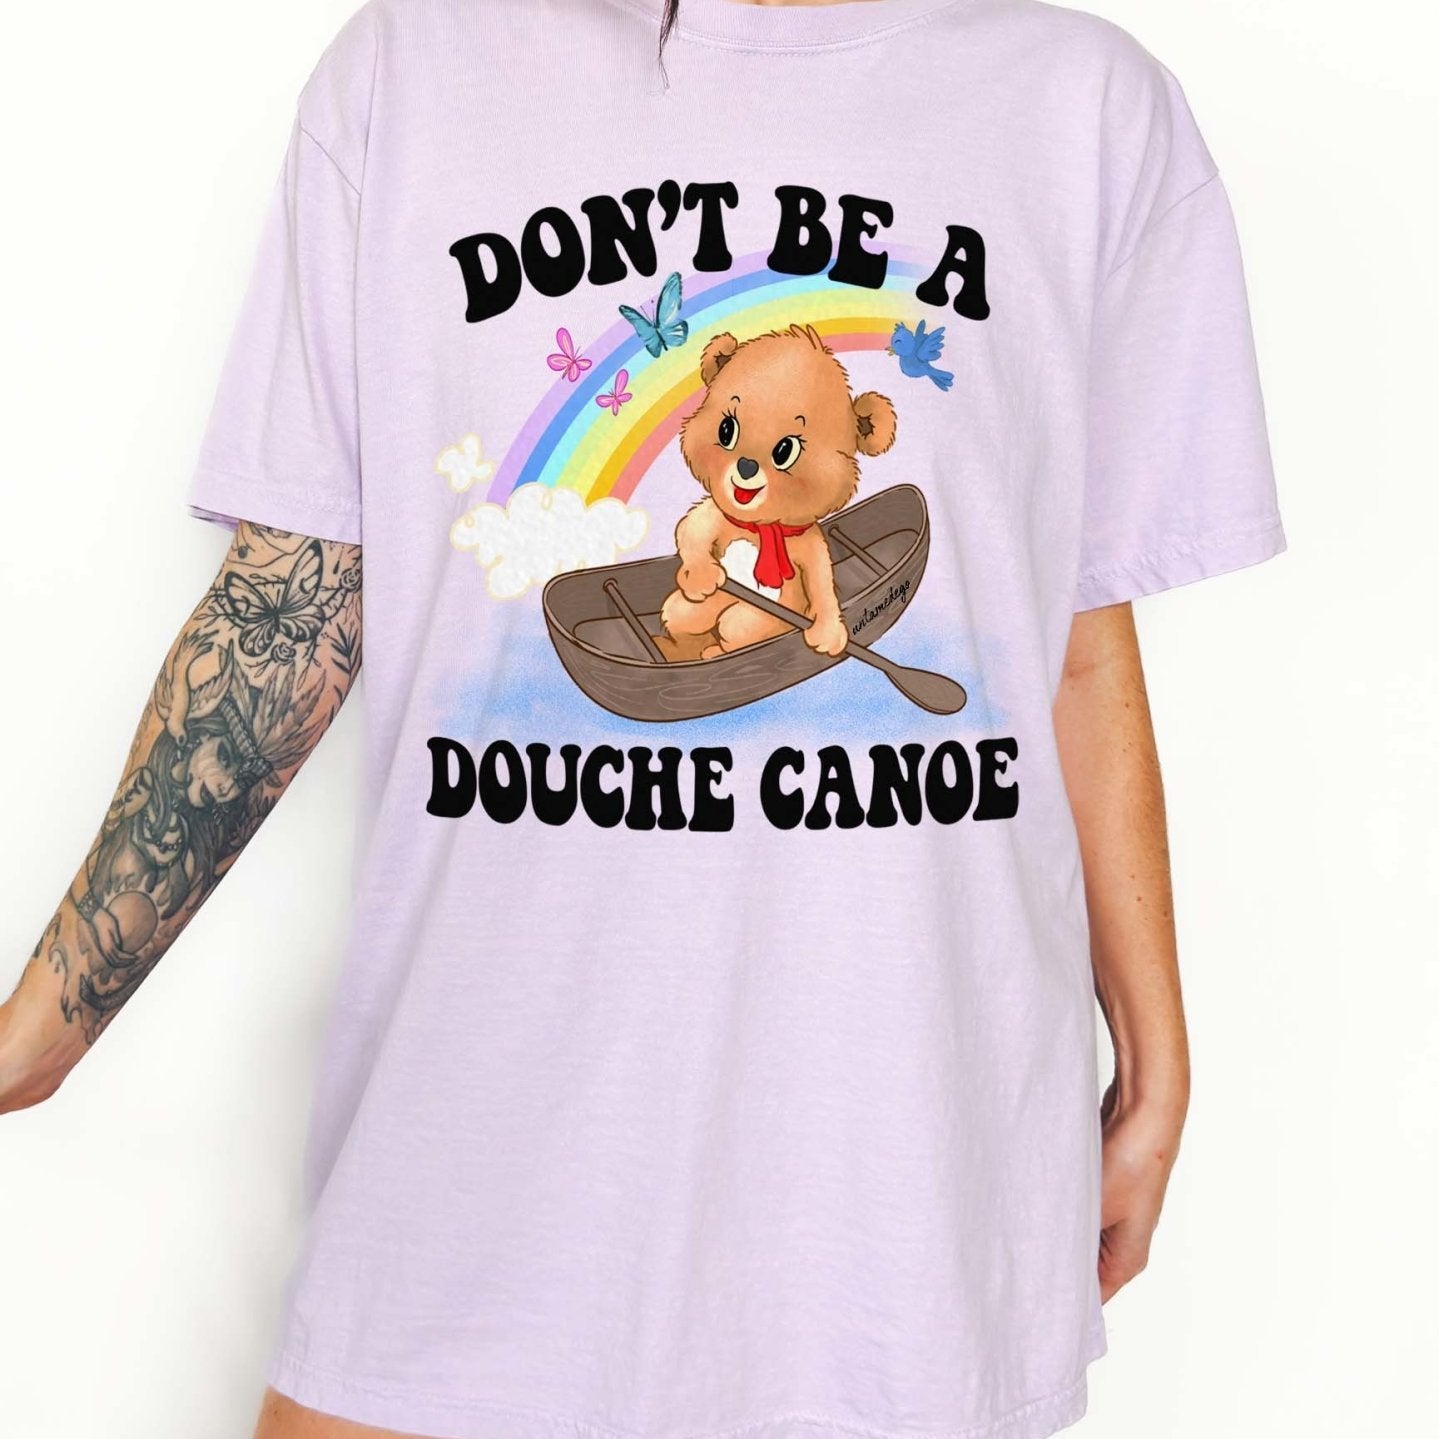 Don't Be A Douche Canoe Lolly The Bear Tee - UntamedEgo LLC.